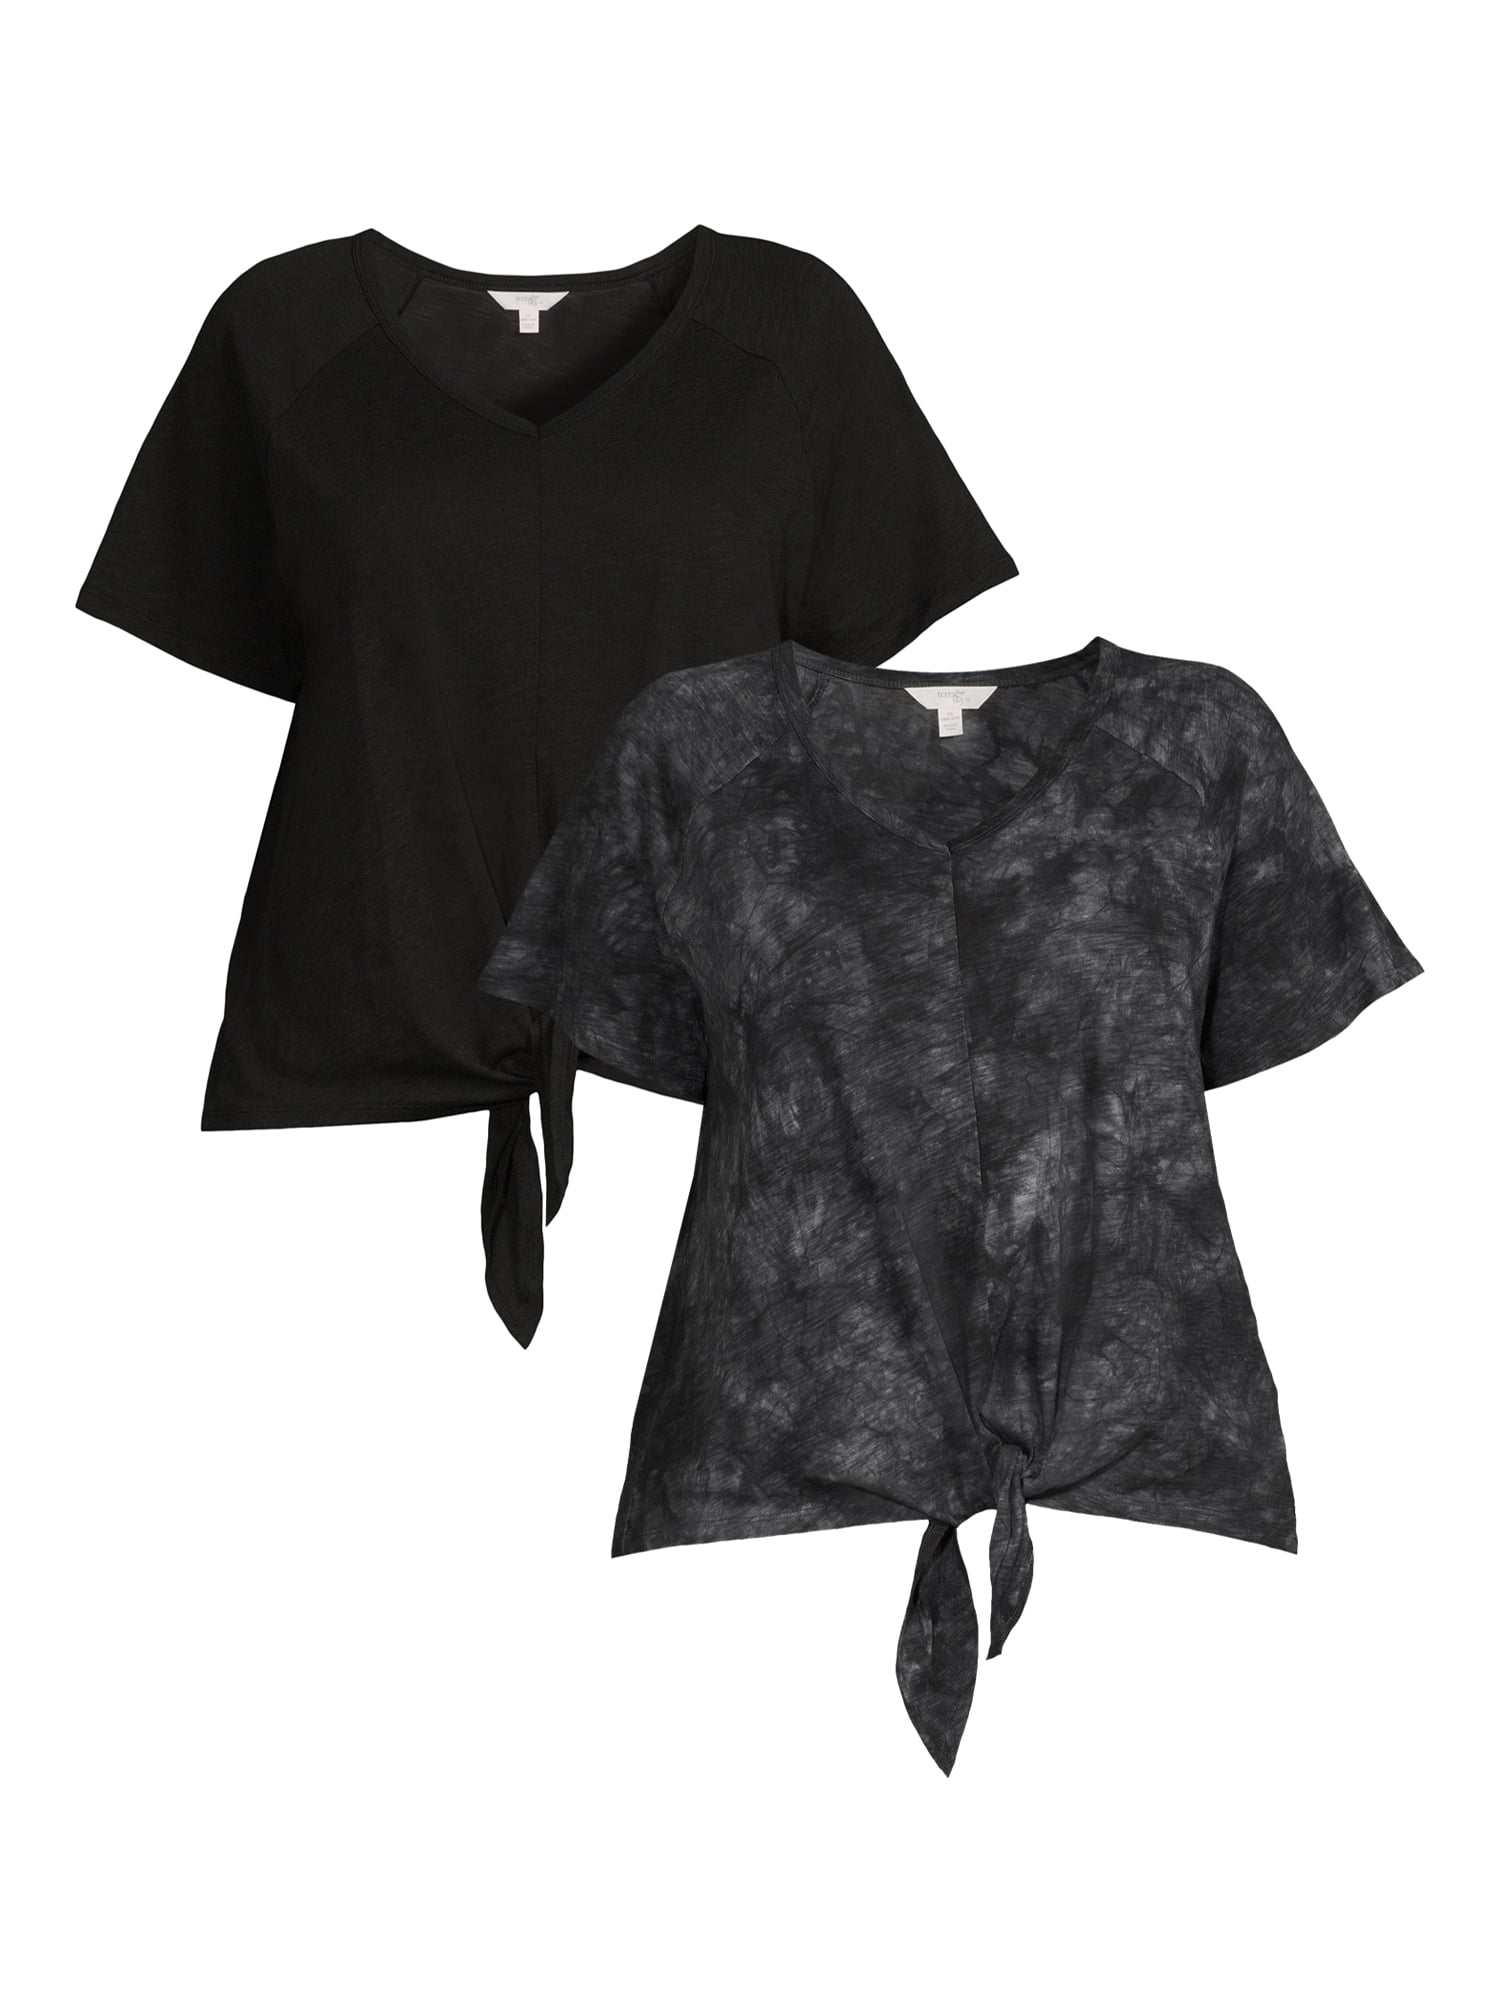 Terra & Sky Black Short Sleeve T-Shirt Size 3X (Plus) - 7% off